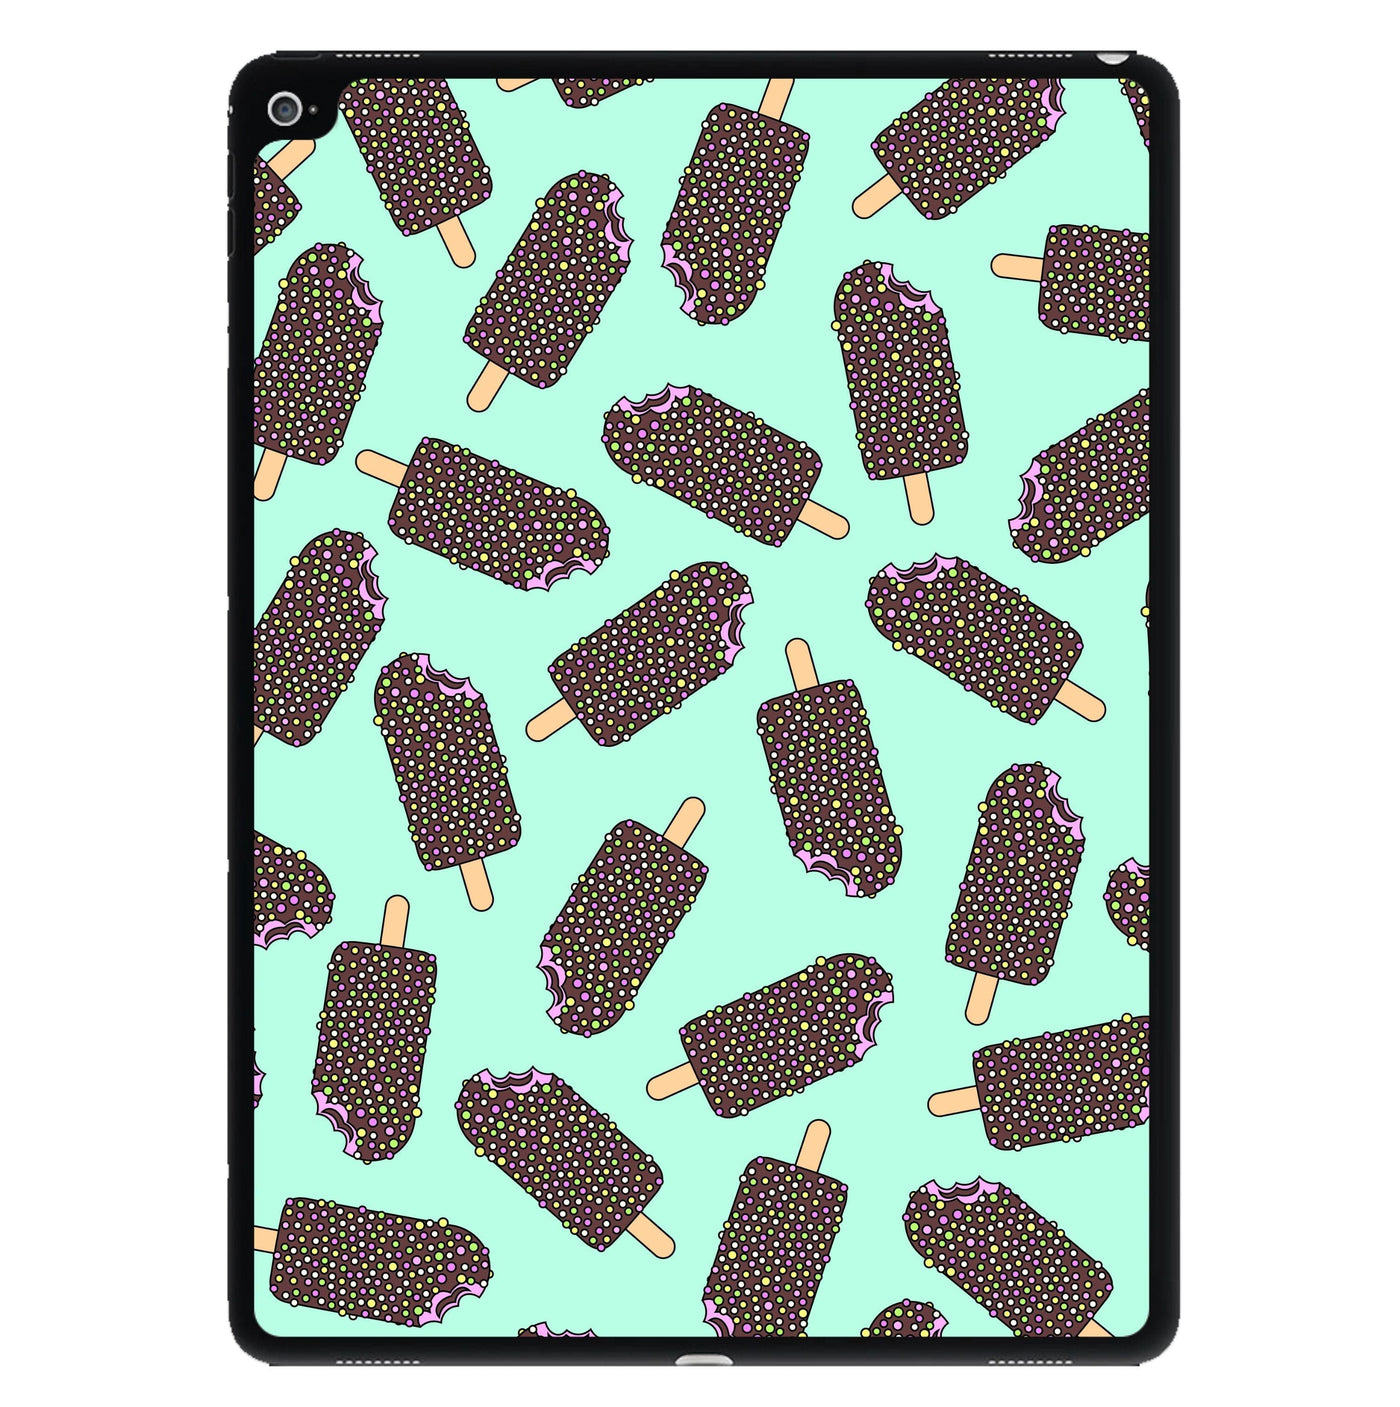 Bobbly - Ice Cream Patterns iPad Case